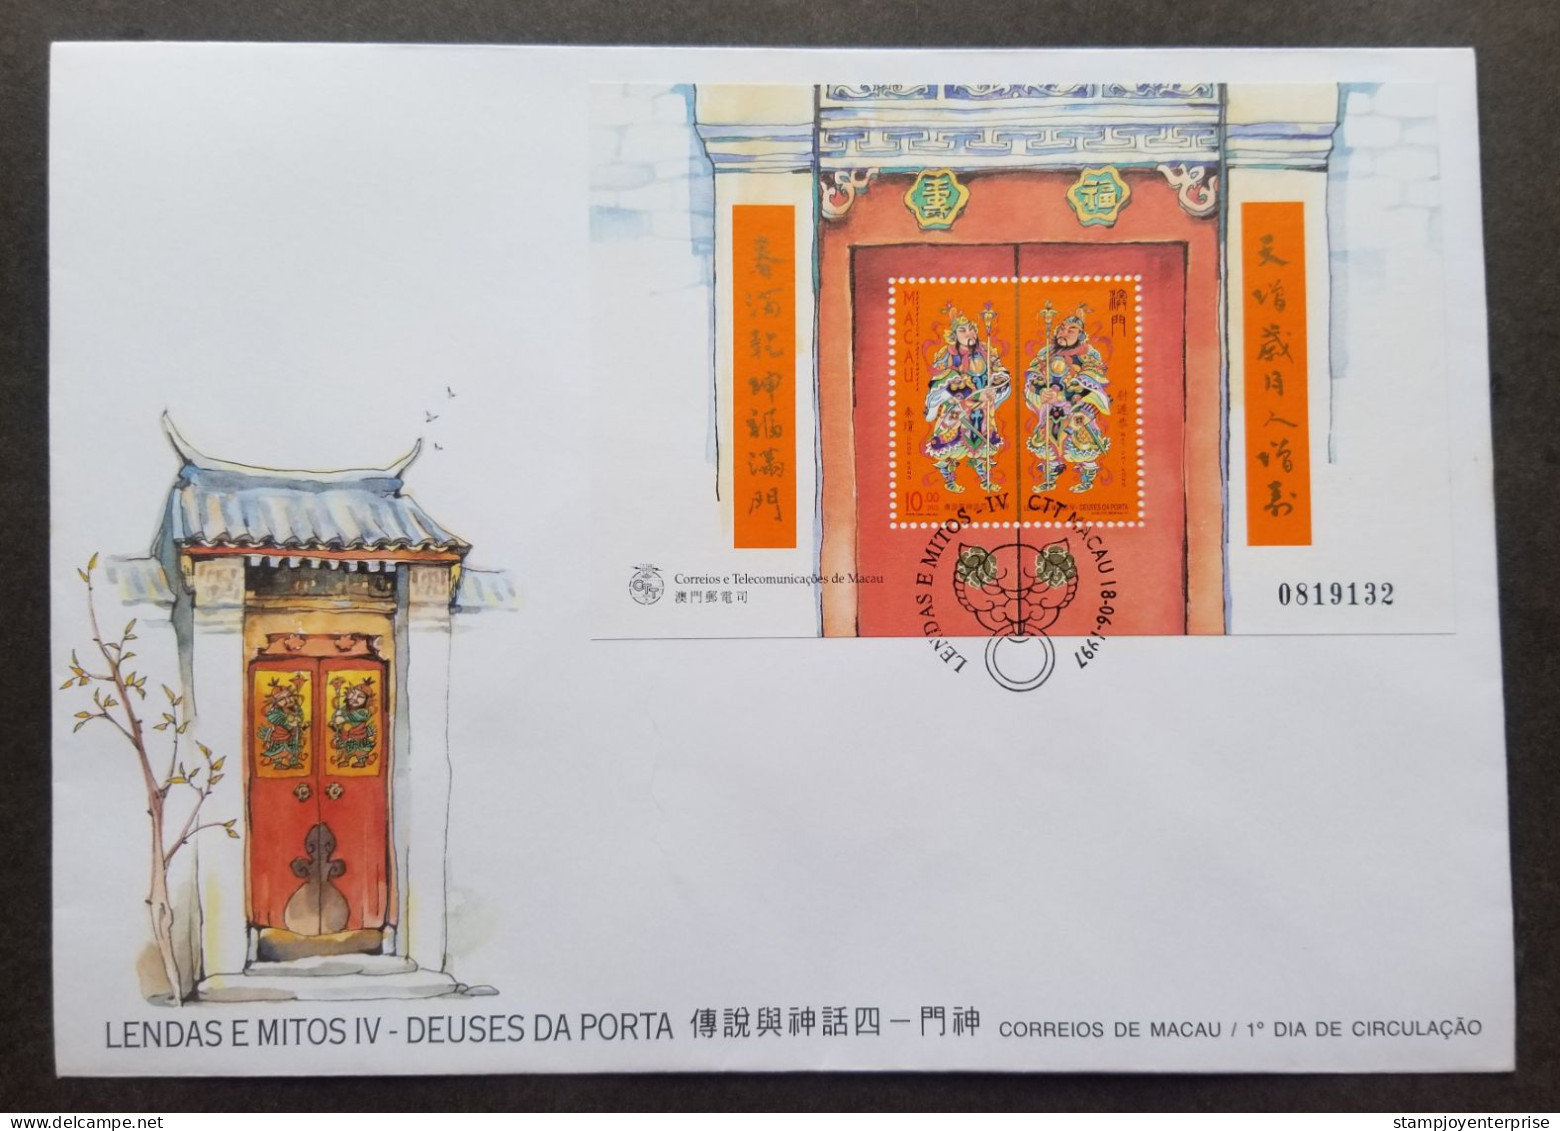 Macau Macao Gateway God Legend 1997 Religious Culture Buddha (FDC) *see Scan - Covers & Documents